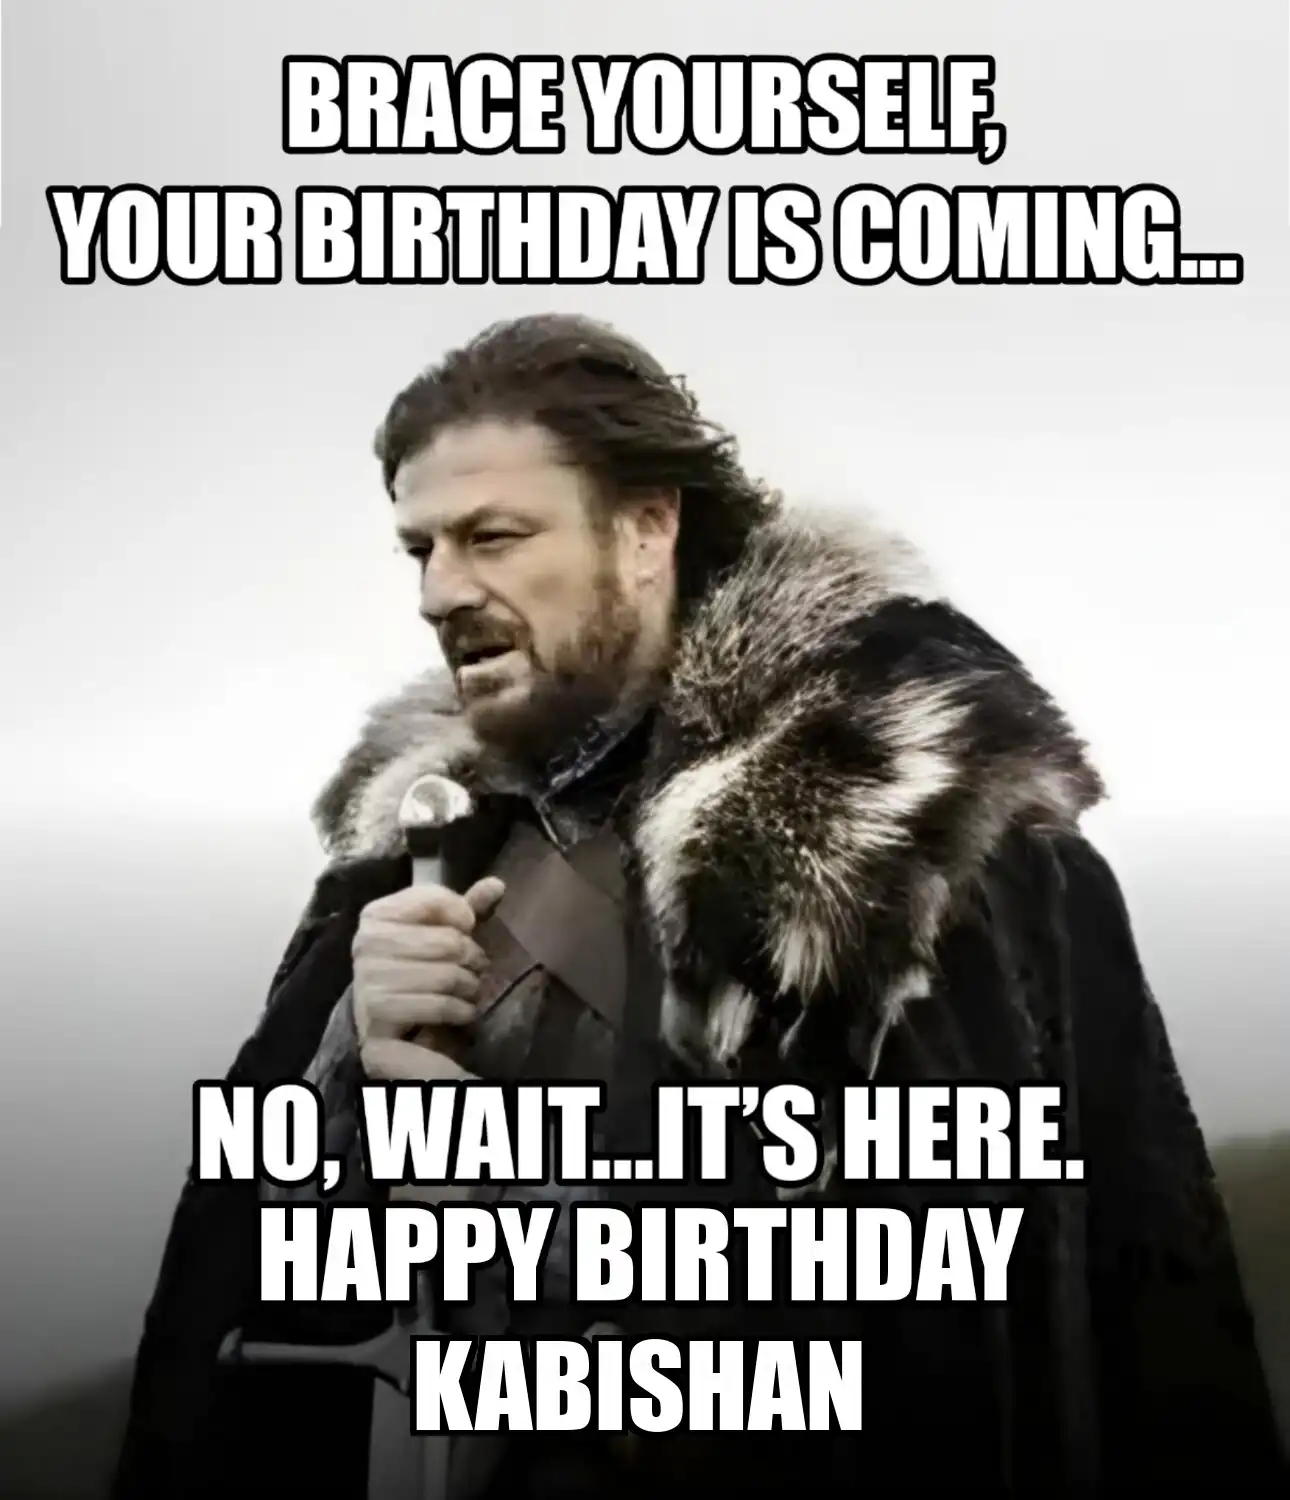 Happy Birthday Kabishan Brace Yourself Your Birthday Is Coming Meme